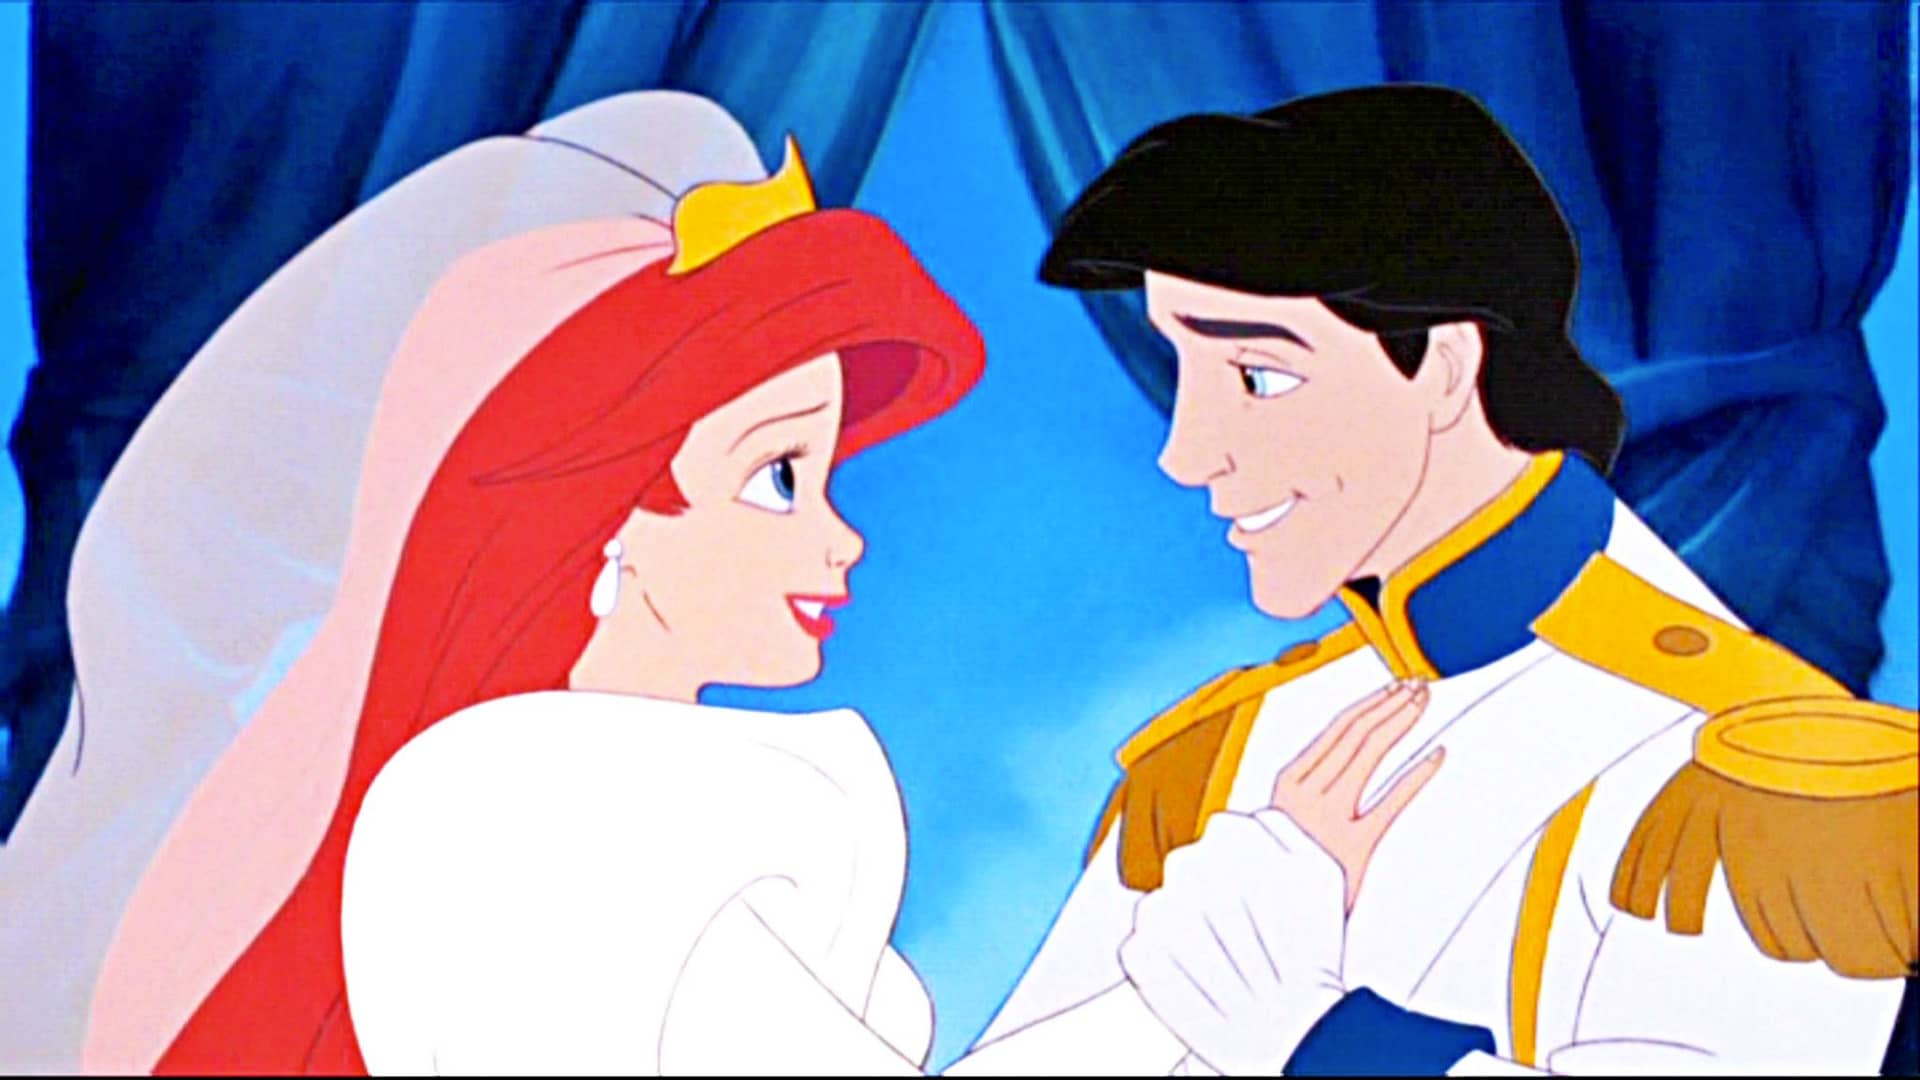 walt-disney-screencaps-princess-ariel-prince-eric-the-little-mermaid-29653531-2560-1440